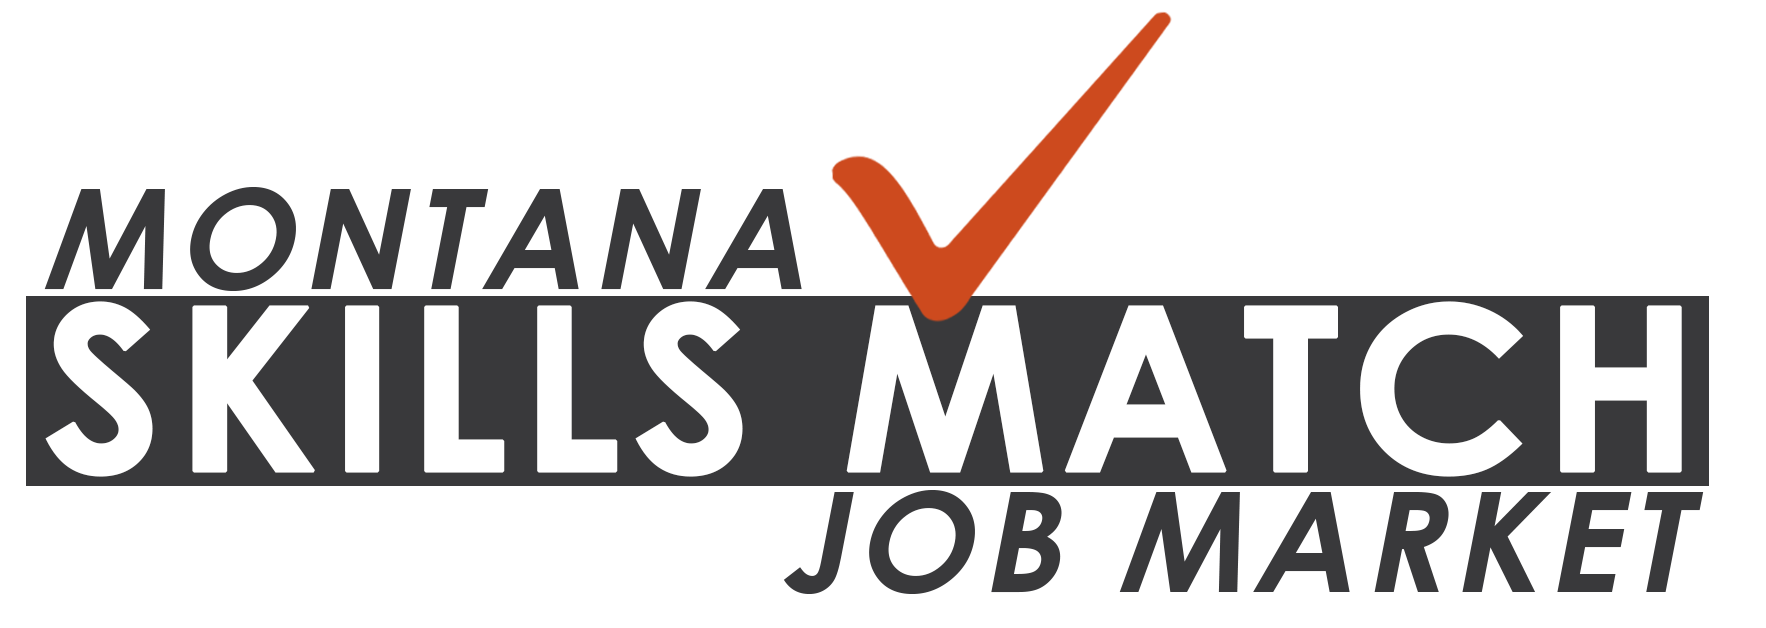 MT_SkillsMatch_JobMarket_trans